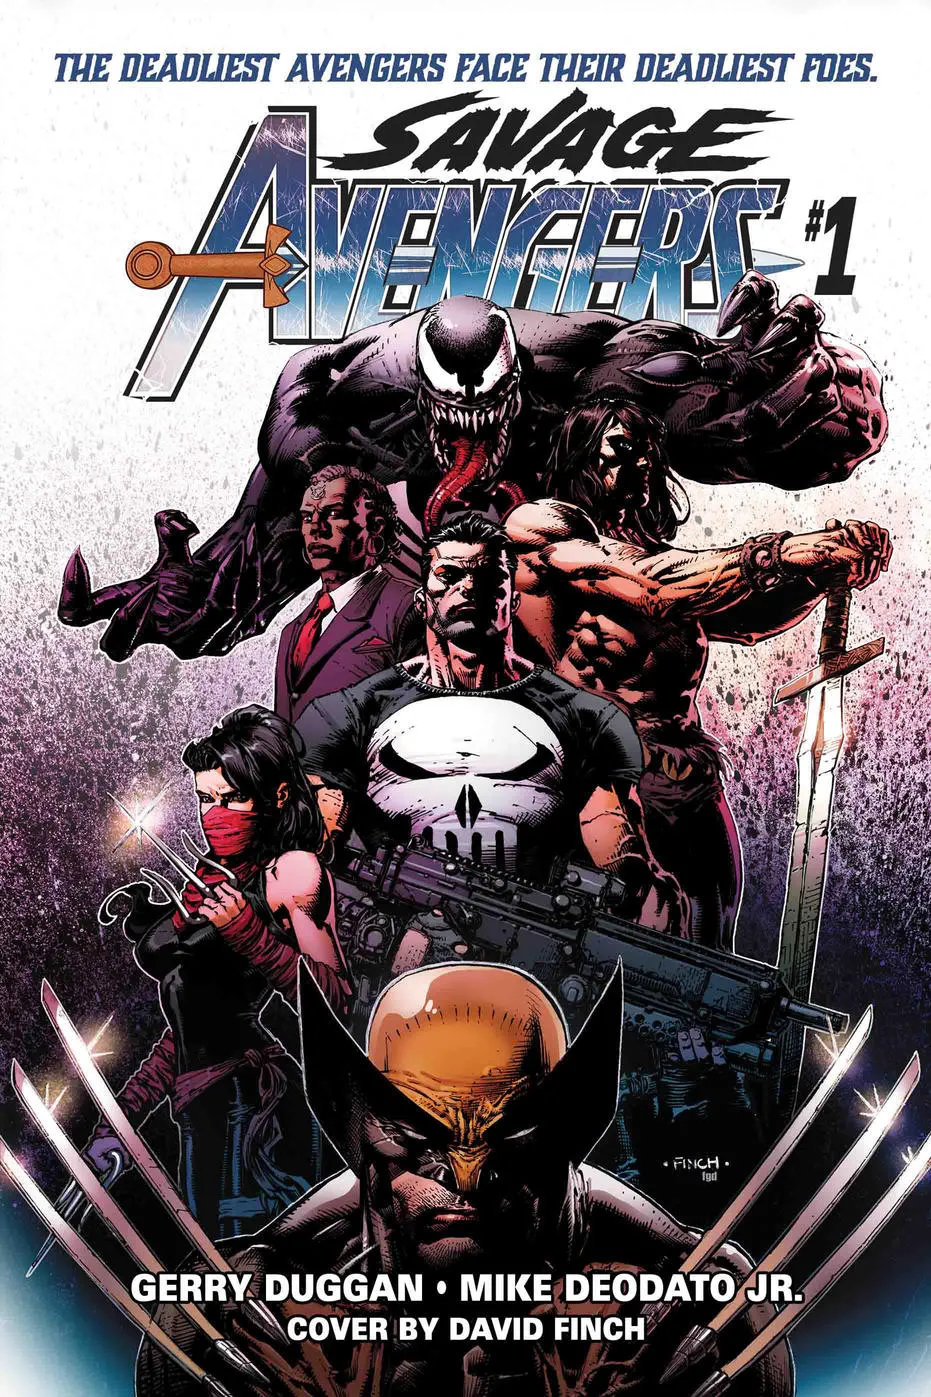 Vicious comics presents avengers deleted